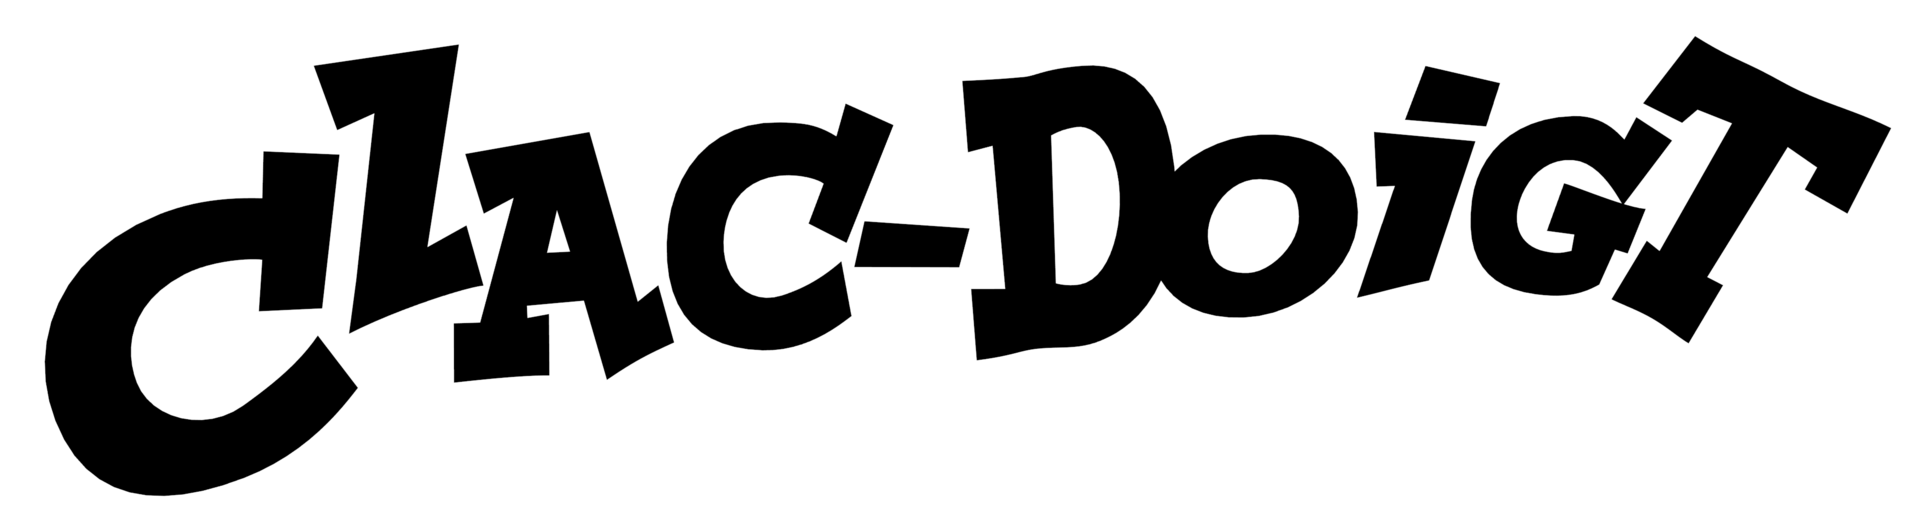 Le logo de CLAC-DOIGT®